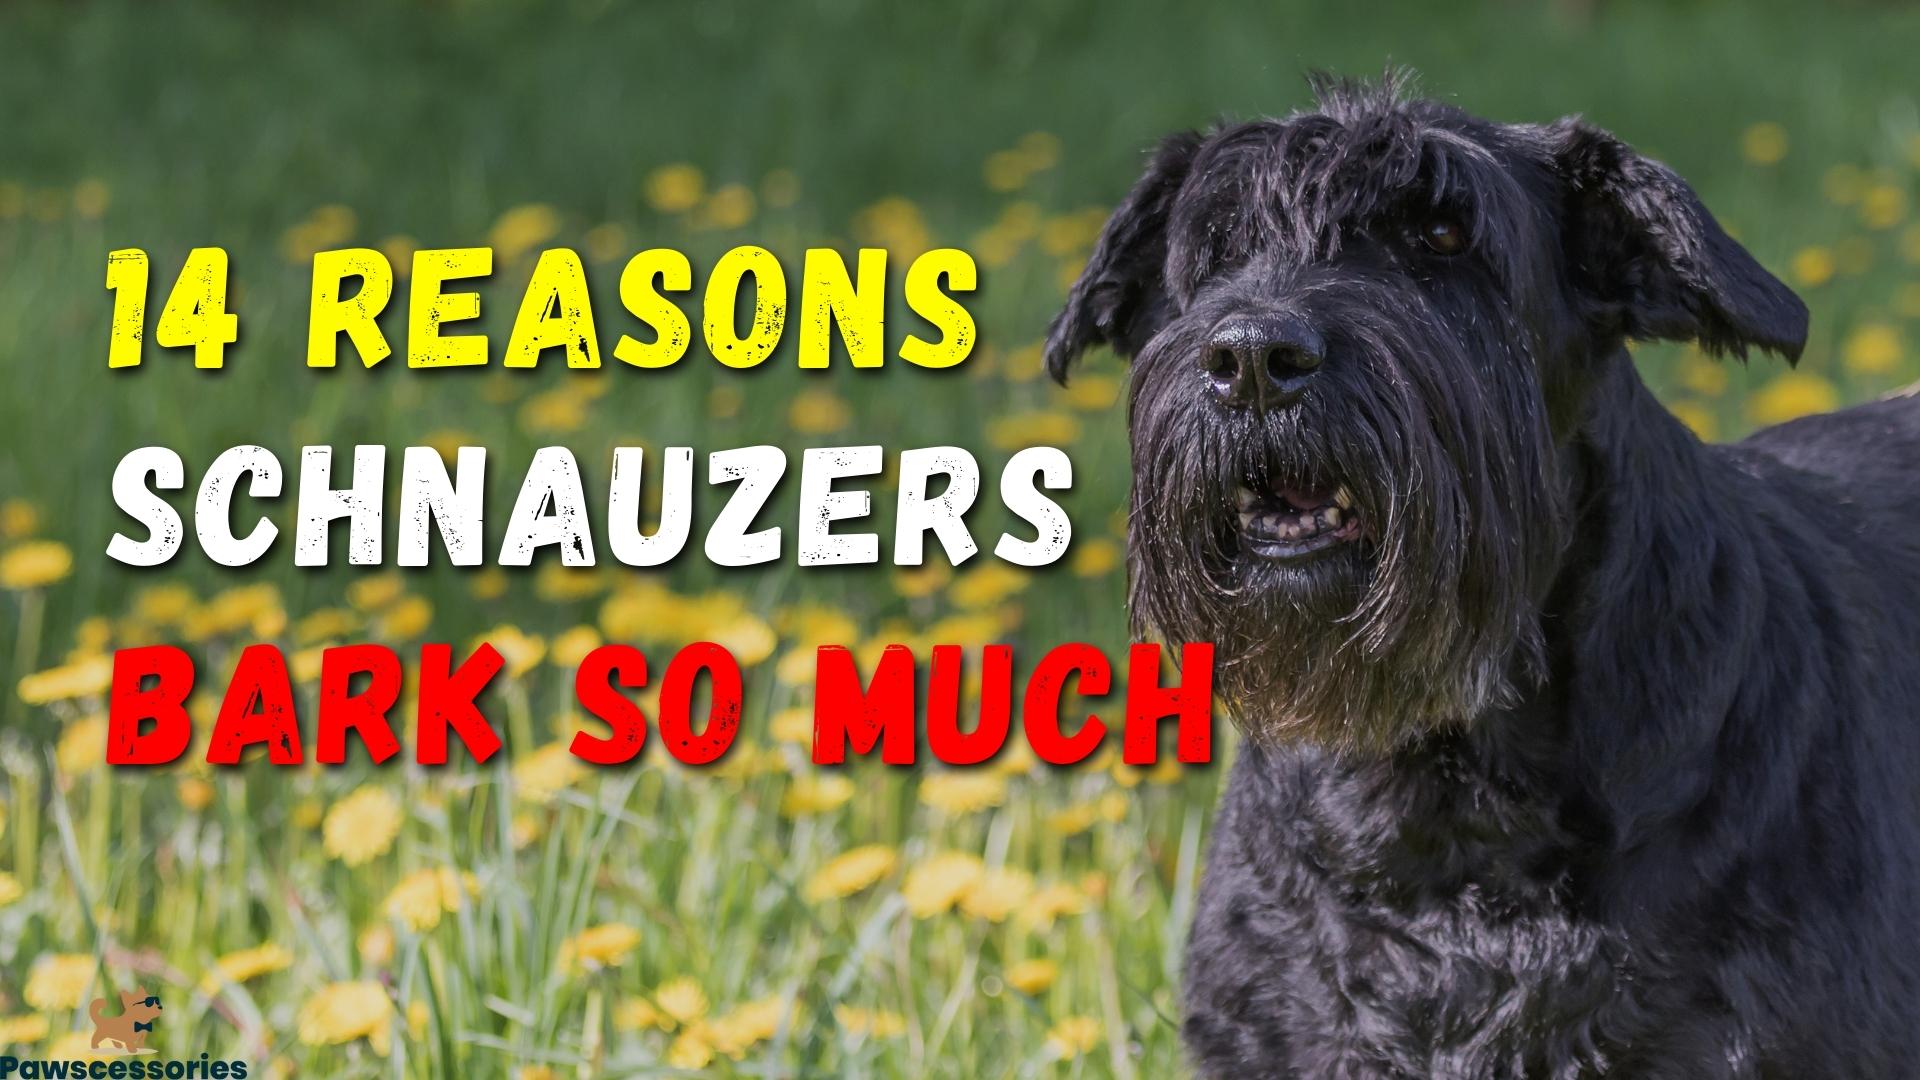 14 Reasons Why Schnauzers Bark So Much + Anti-Bark Tips